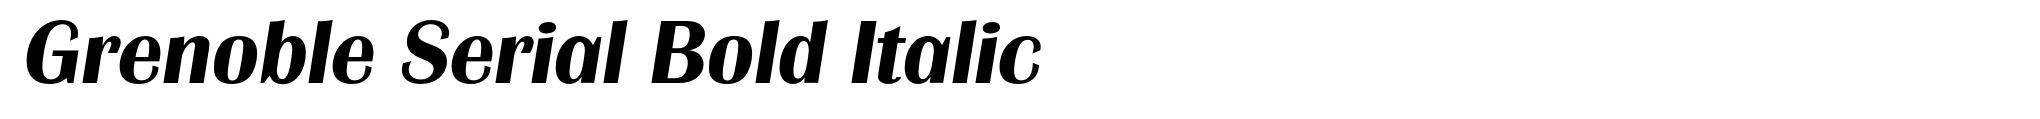 Grenoble Serial Bold Italic image